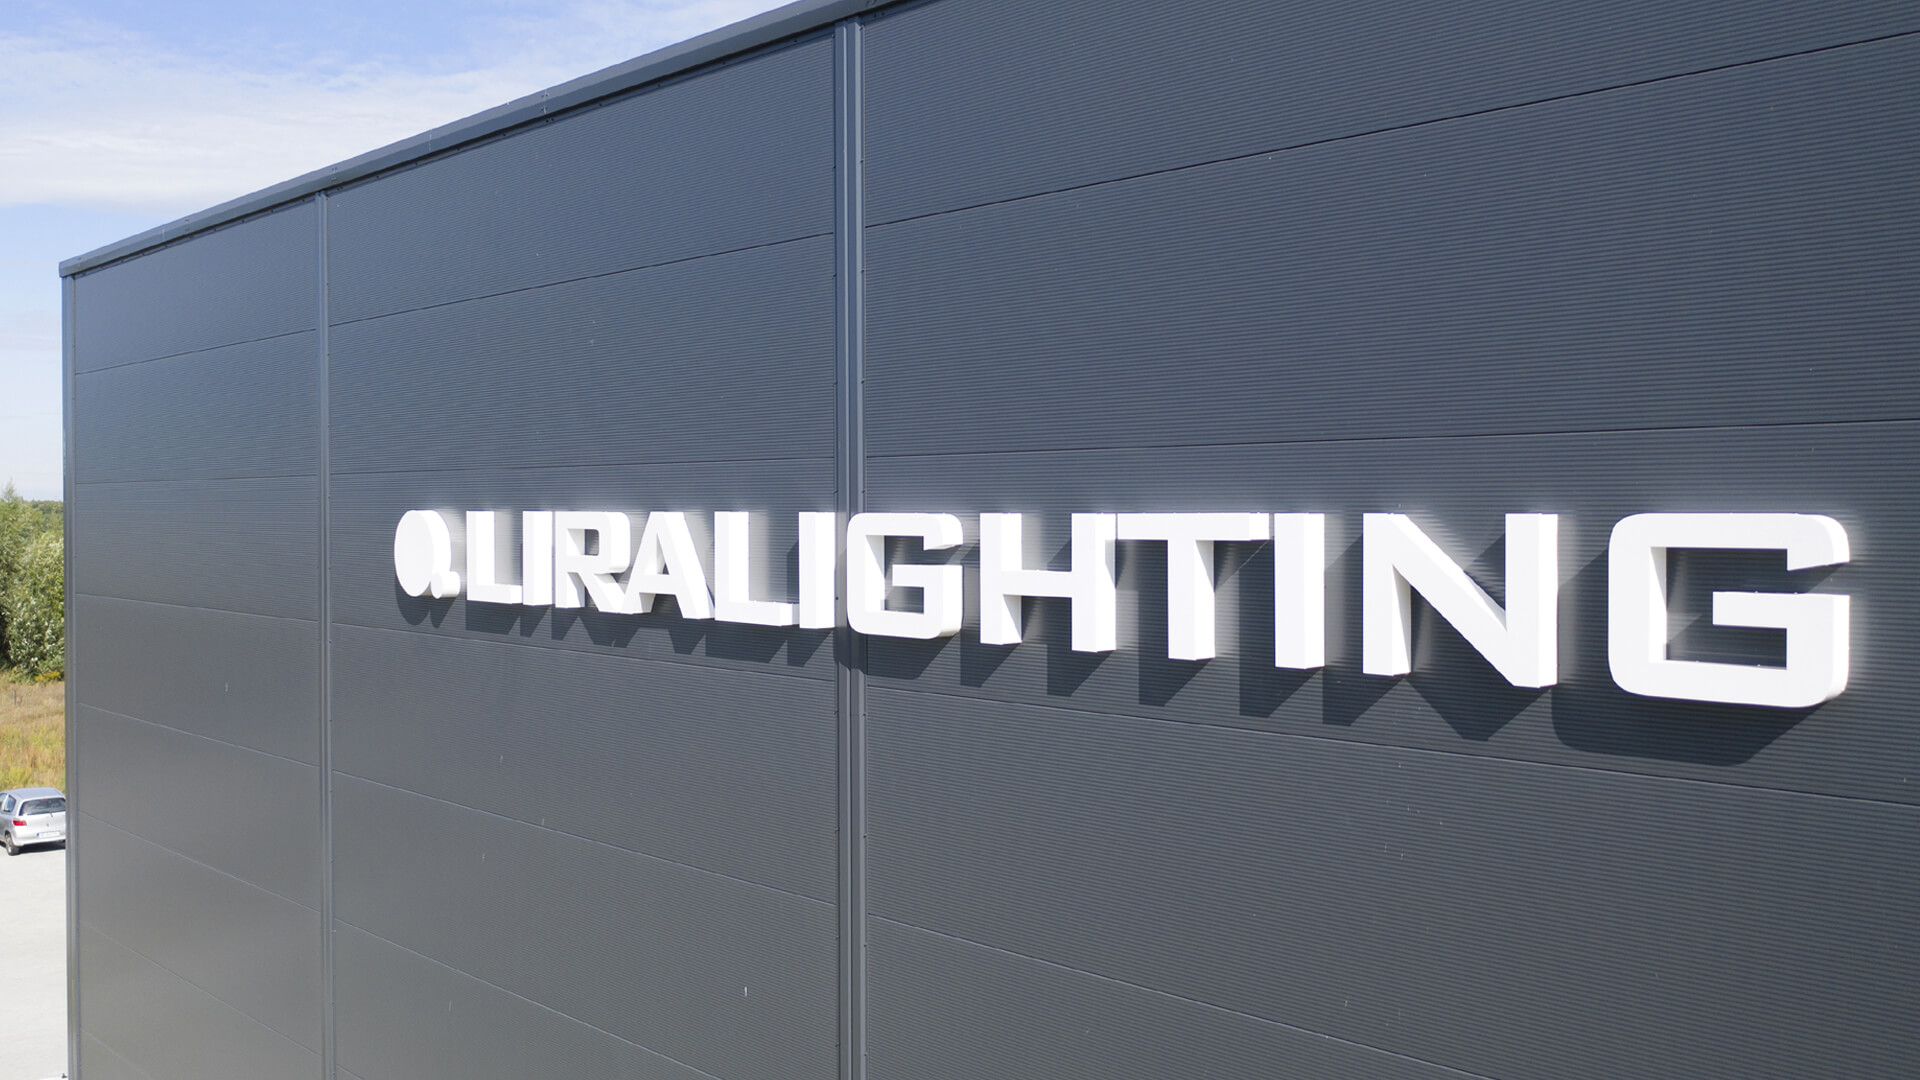 Lettres lumineuses Liralighting - Lettres LED 3D pour hall industriel en blanc.